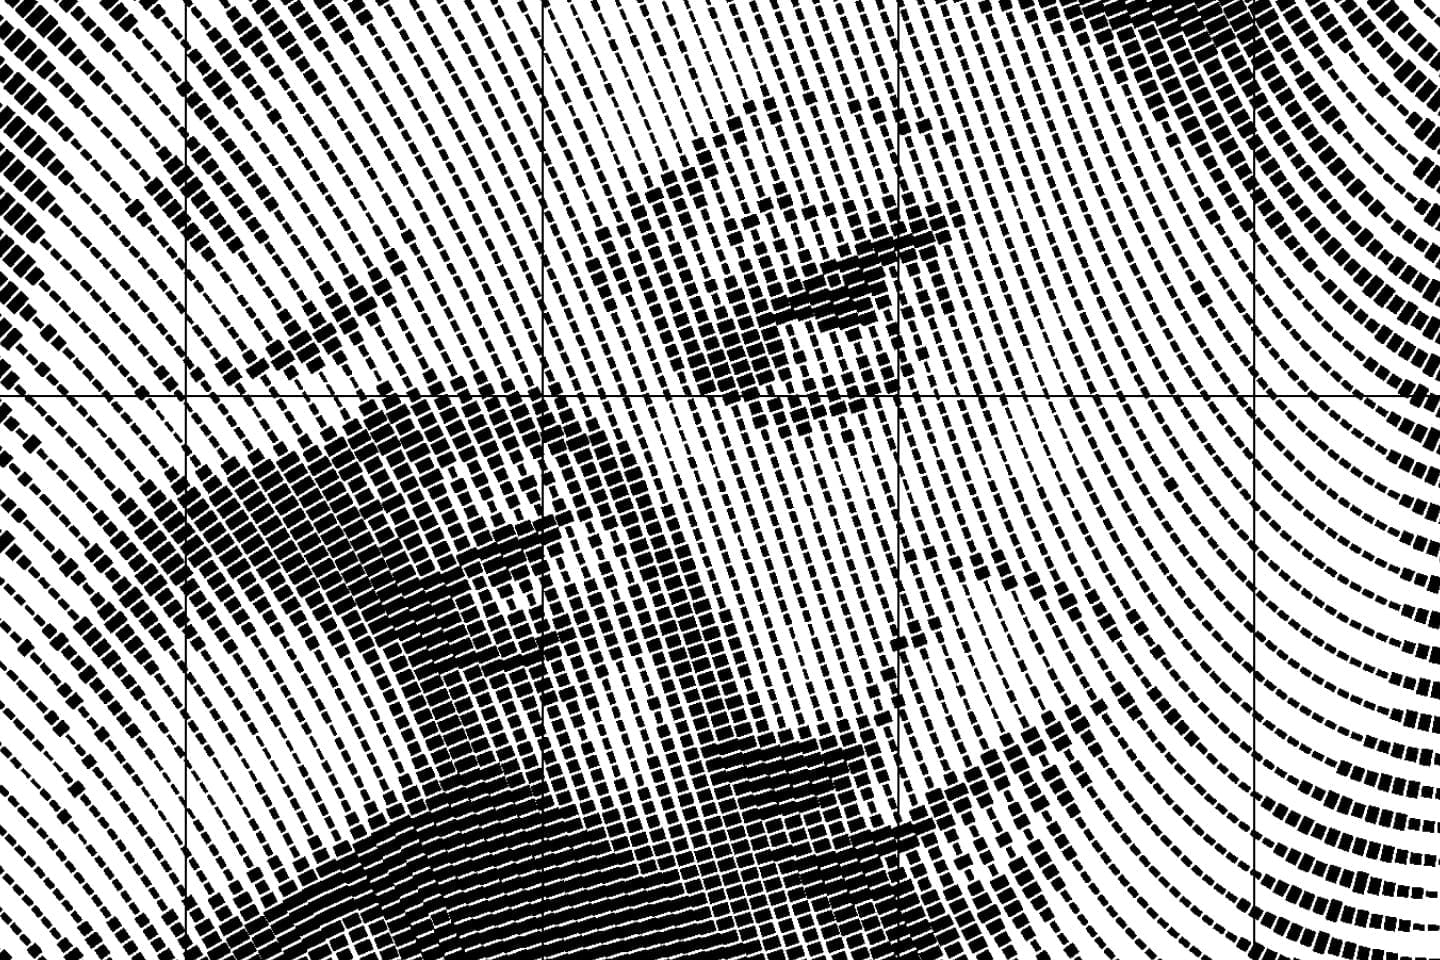 ImageLines rendering of Zaha Hadid portrait.